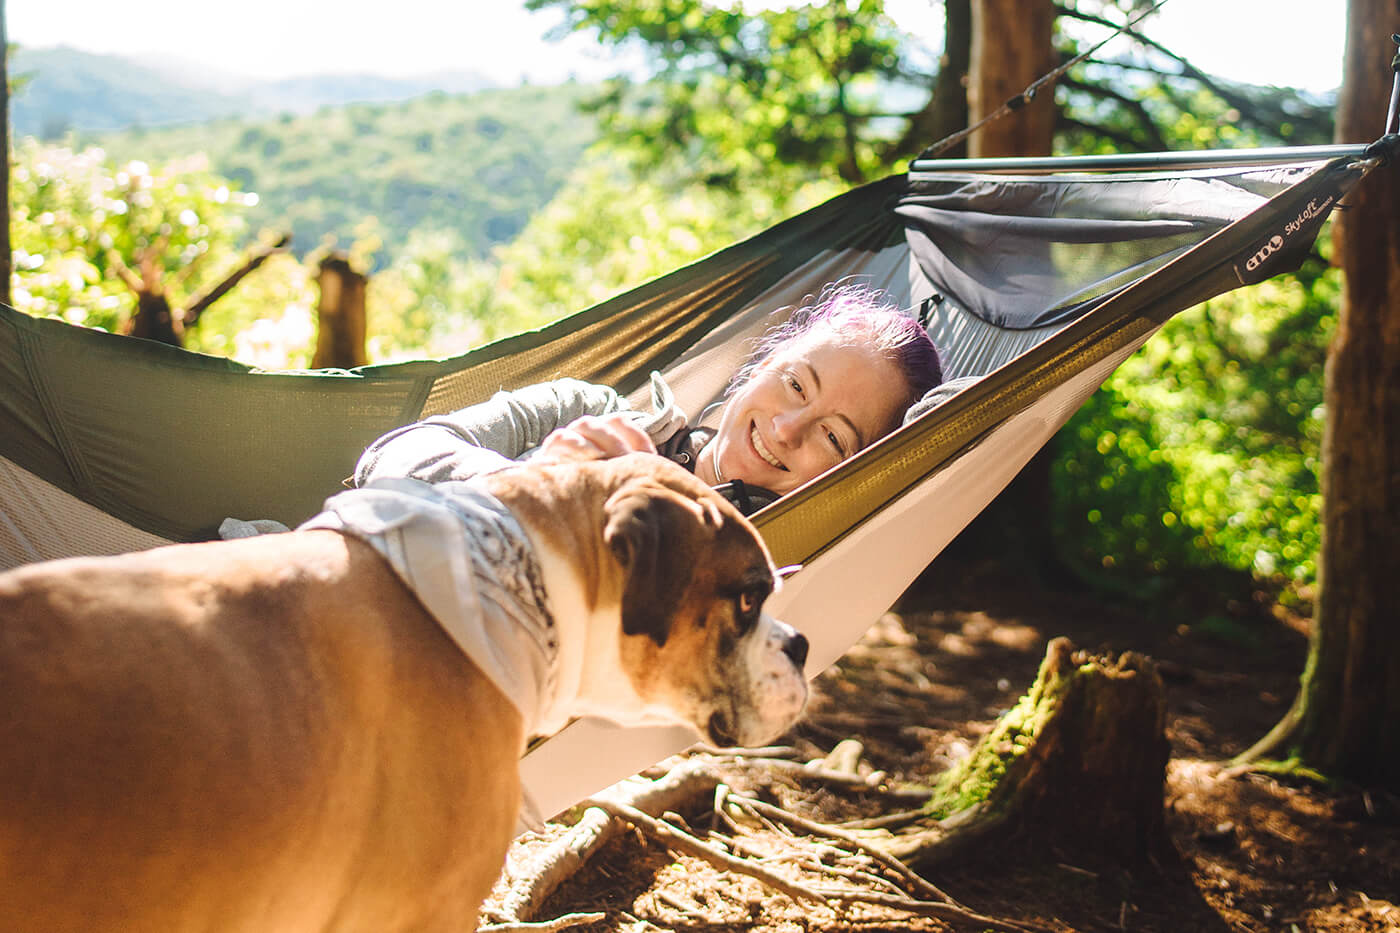 A woman pets a dog while in a SkyLoft hammock